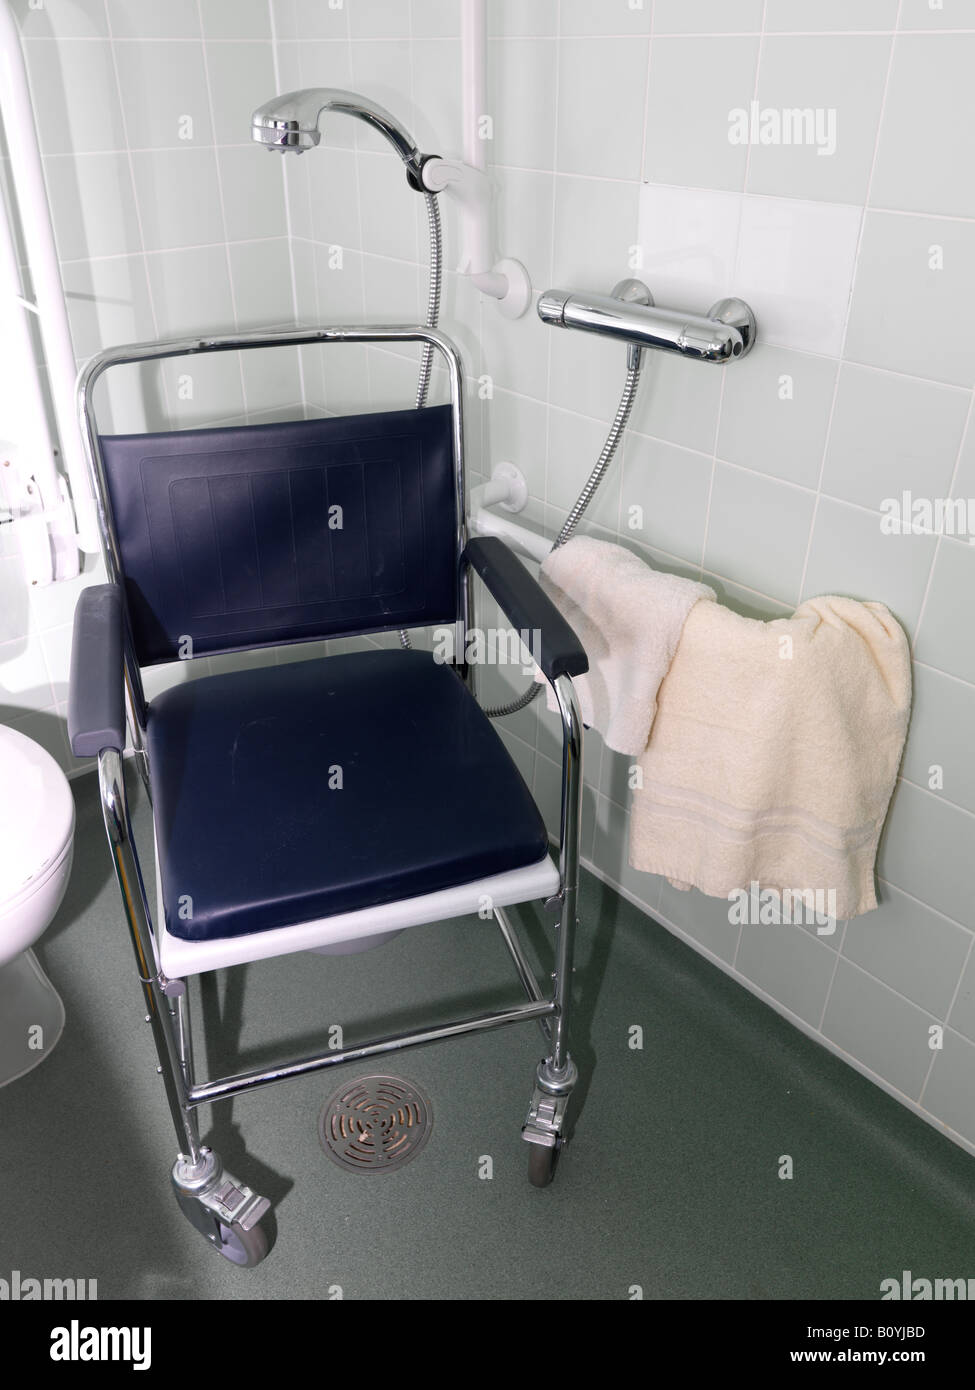 Ducha para discapacitados fotografías e imágenes de alta resolución - Alamy